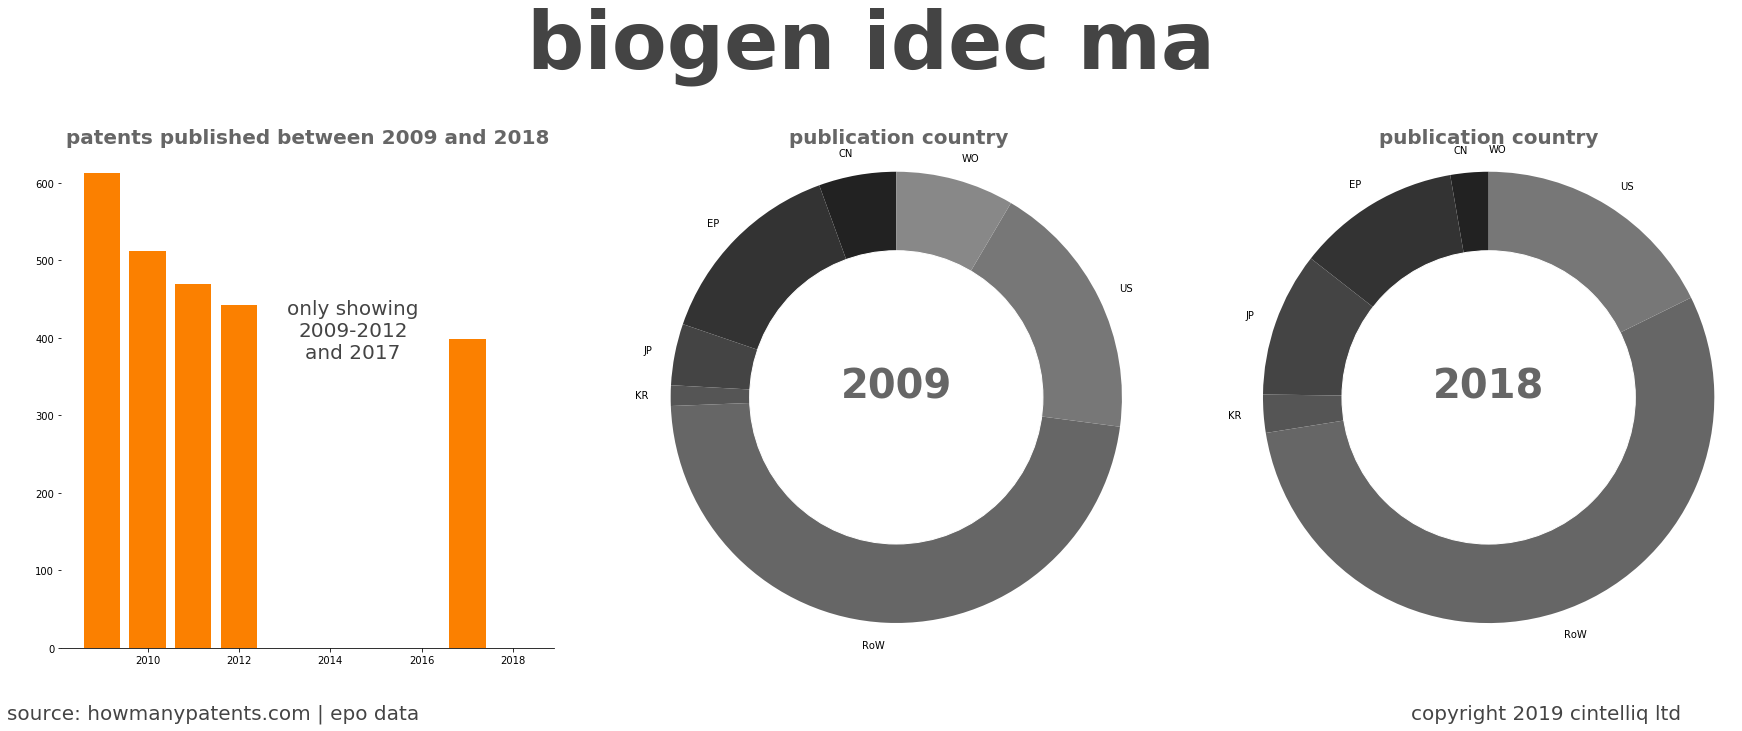 summary of patents for Biogen Idec Ma